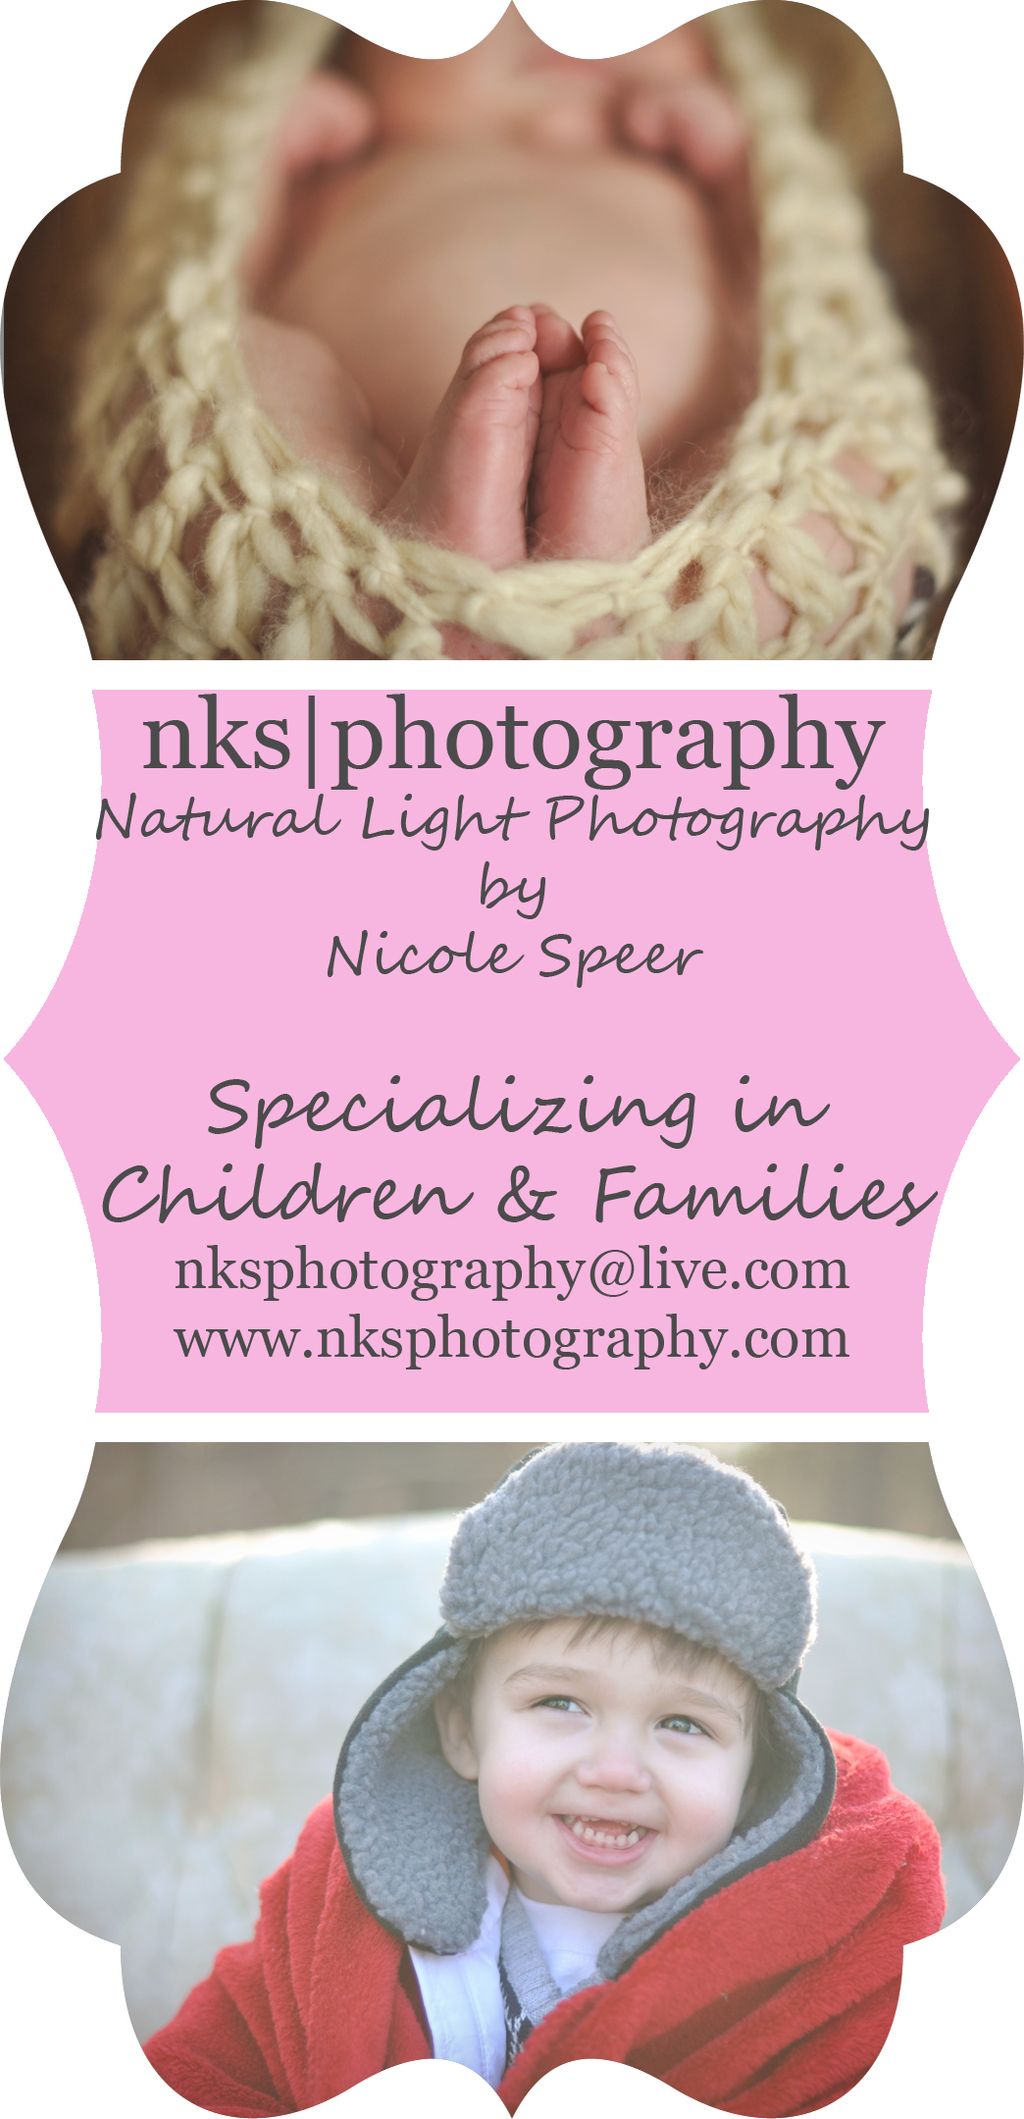 NKS Photography